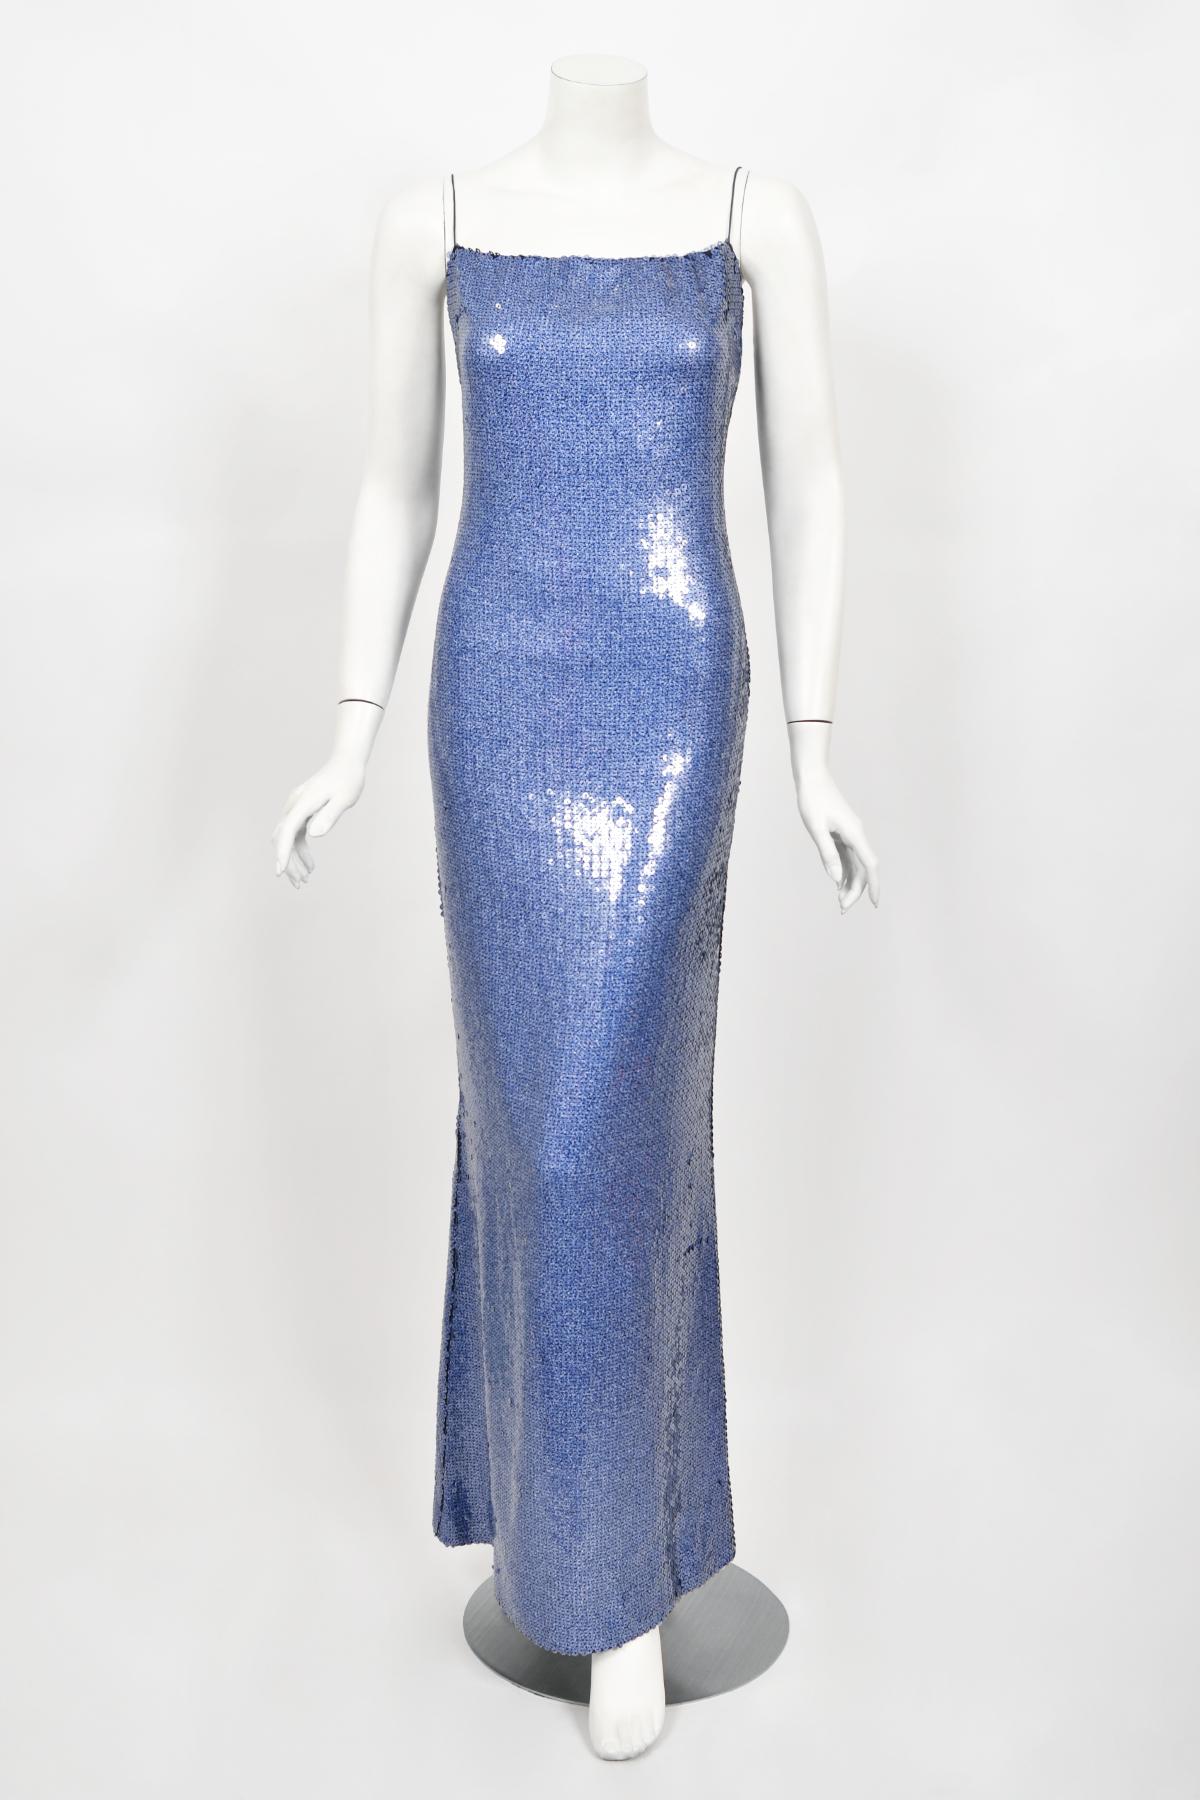 2000 Christian Dior by John Galliano Fully-Sequin Ocean Blue Bias-Cut Slip Gown  5